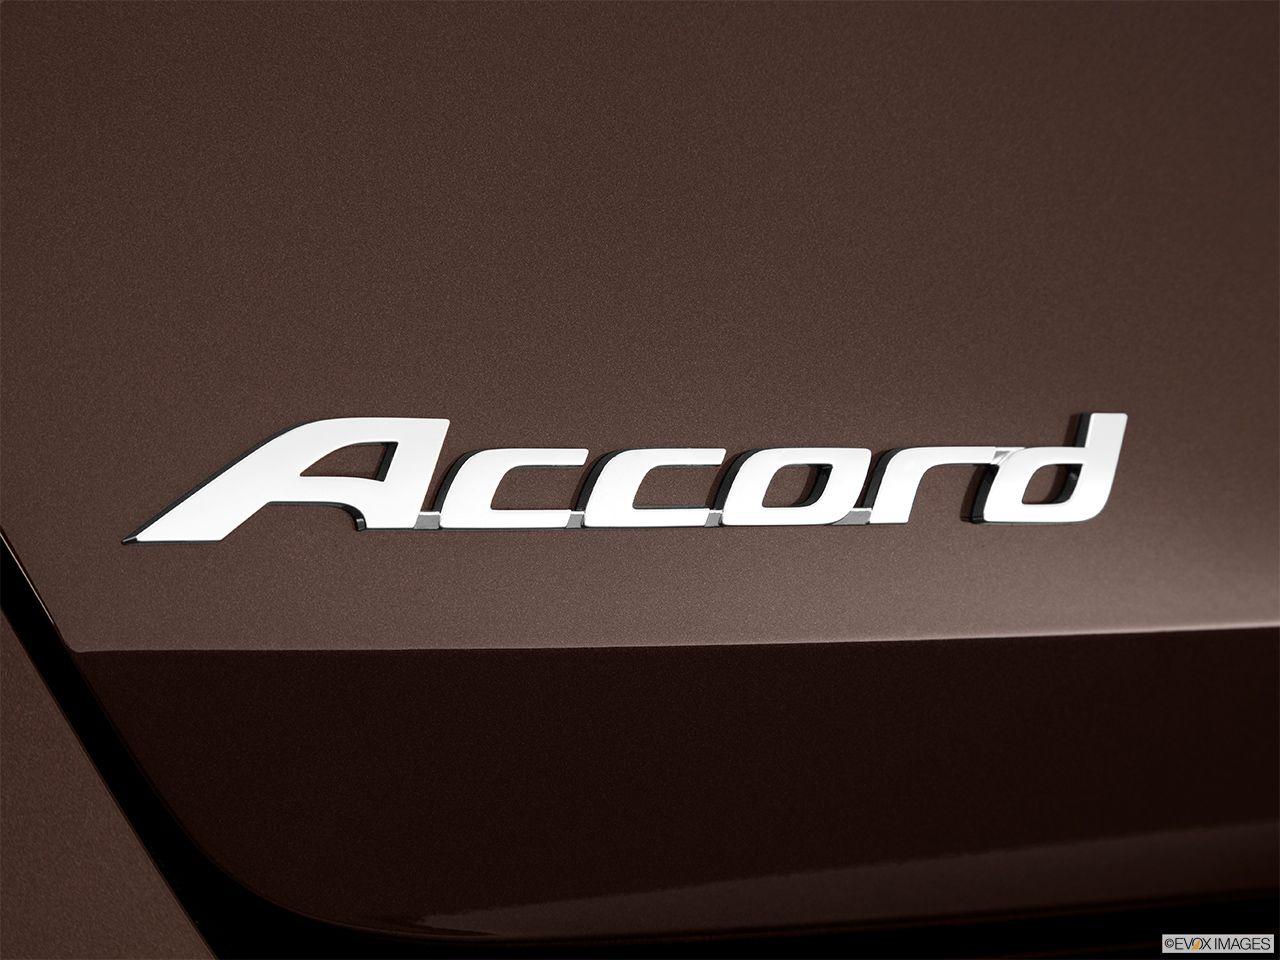 Honda Accord Logo - Honda Accord Coupe I4 CVT EX angle view 2015 Honda